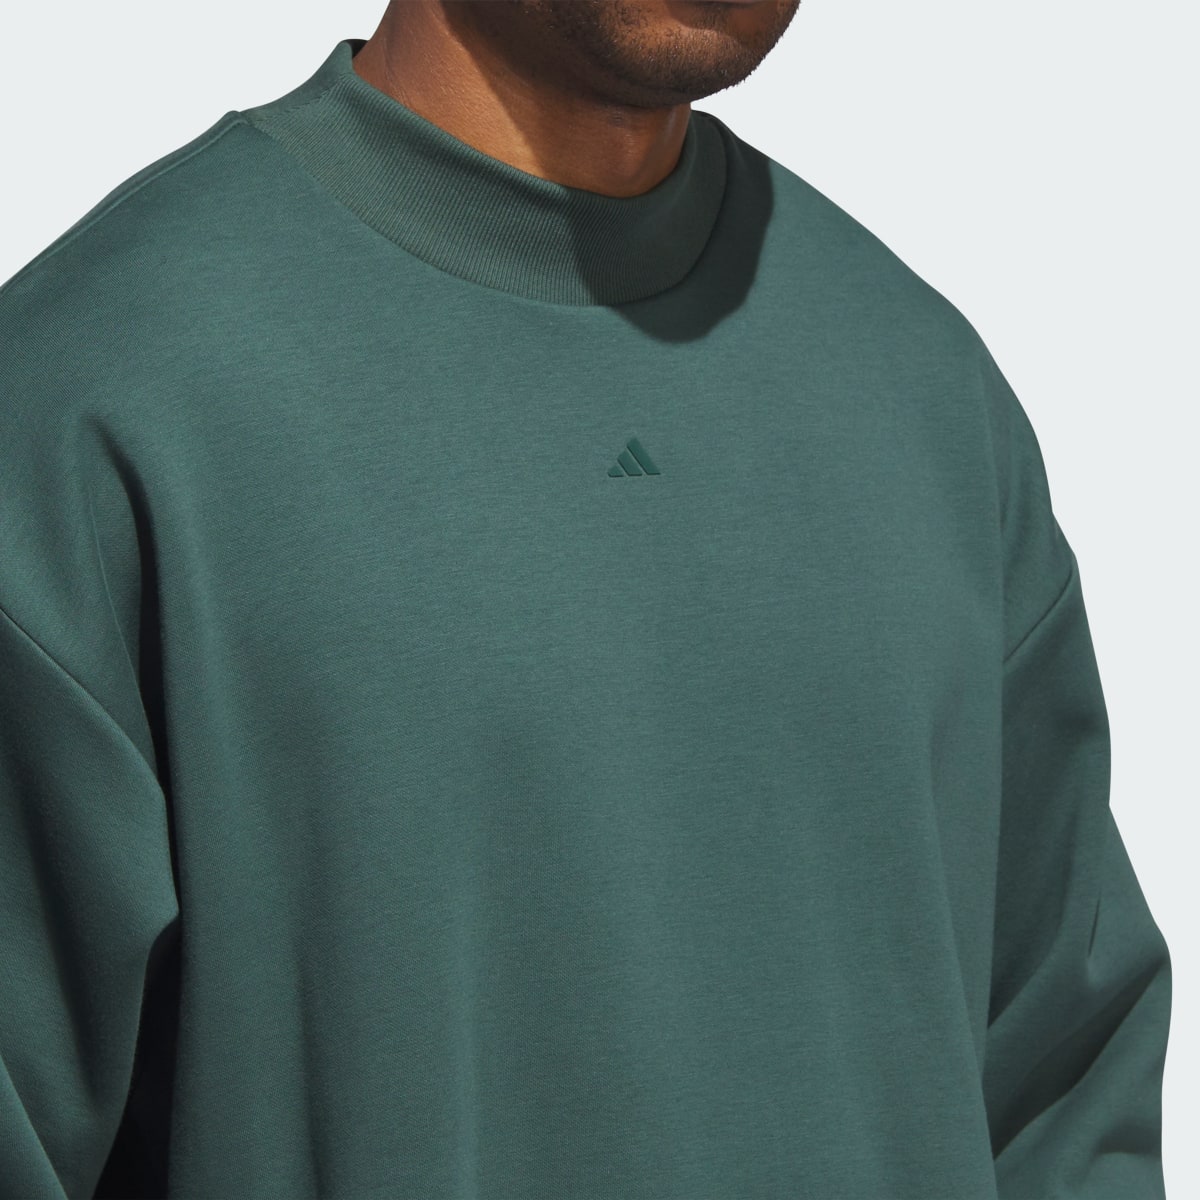 Adidas Basketball Sweatshirt. 6